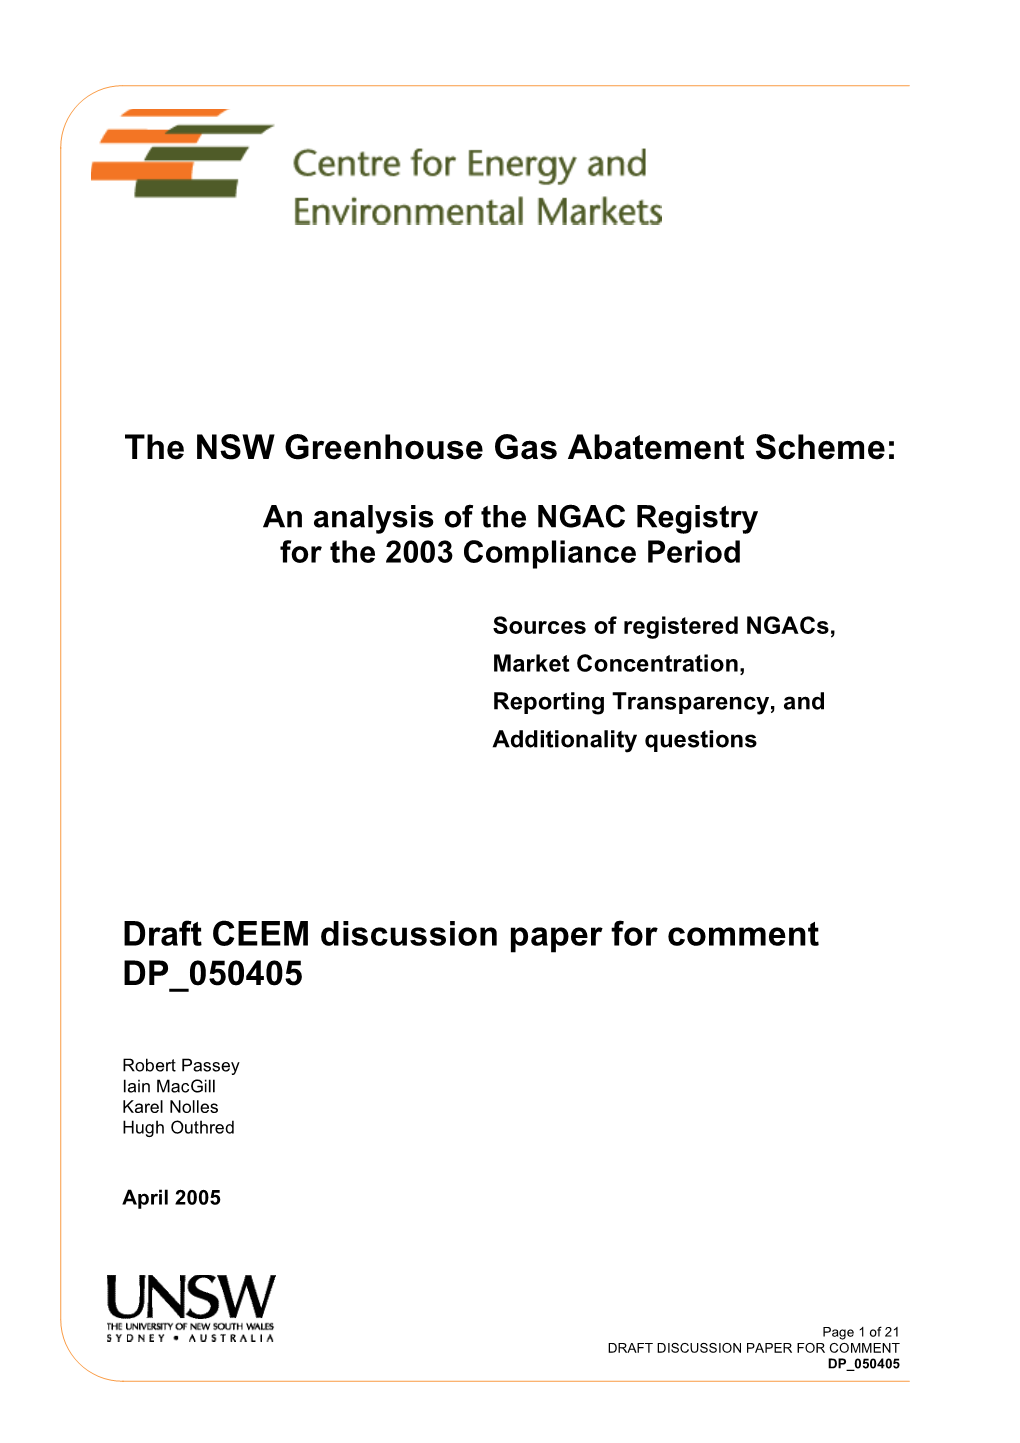 The NSW Greenhouse Gas Abatement Scheme